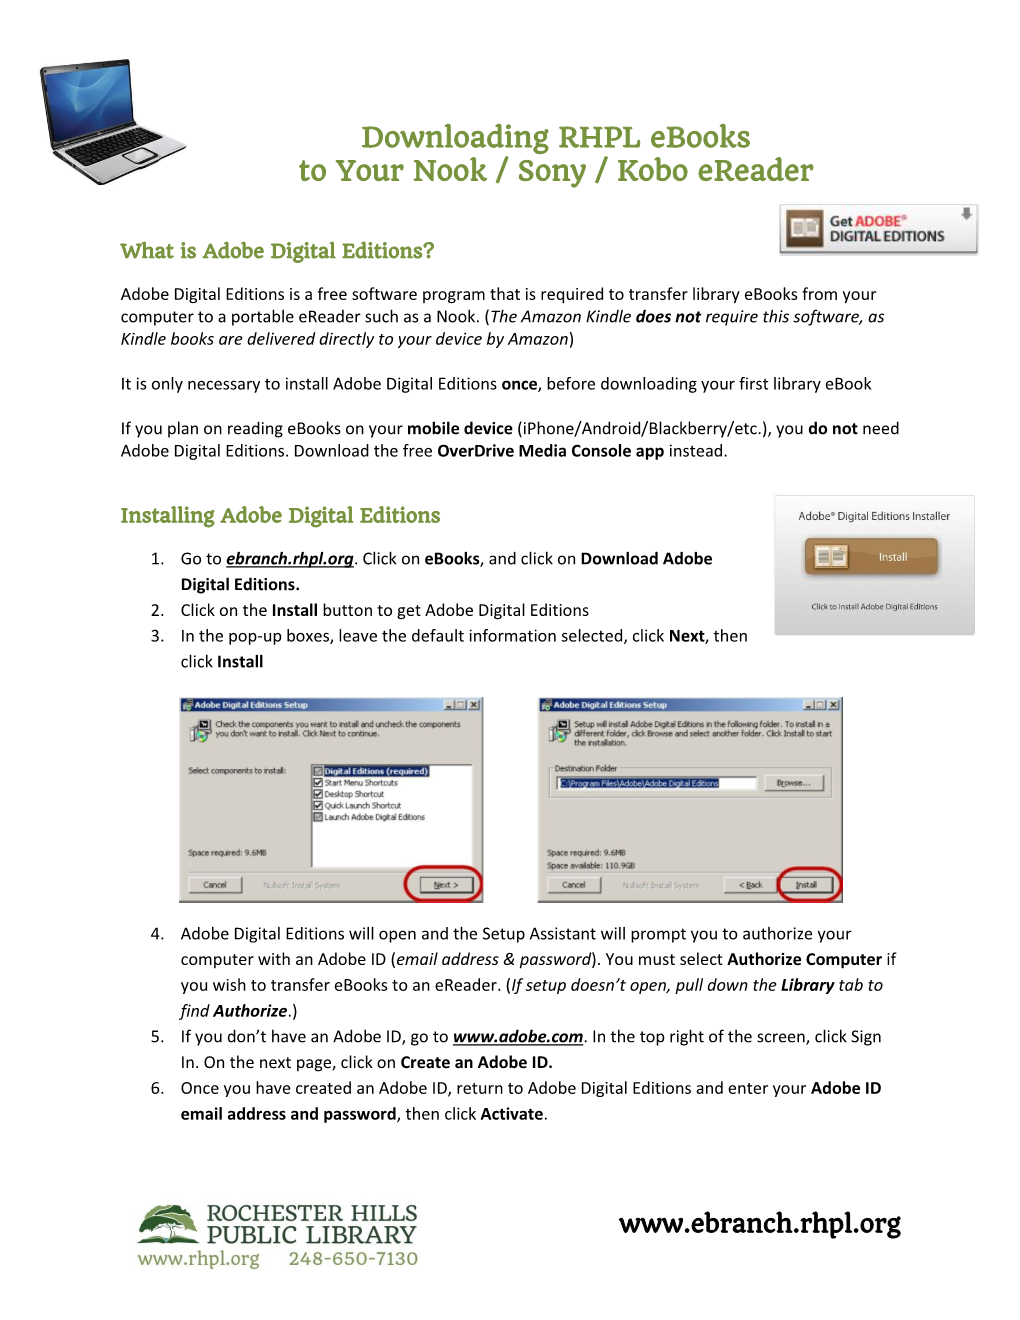 Downloading RHPL Ebooks to Your Nook / Sony / Kobo Ereader